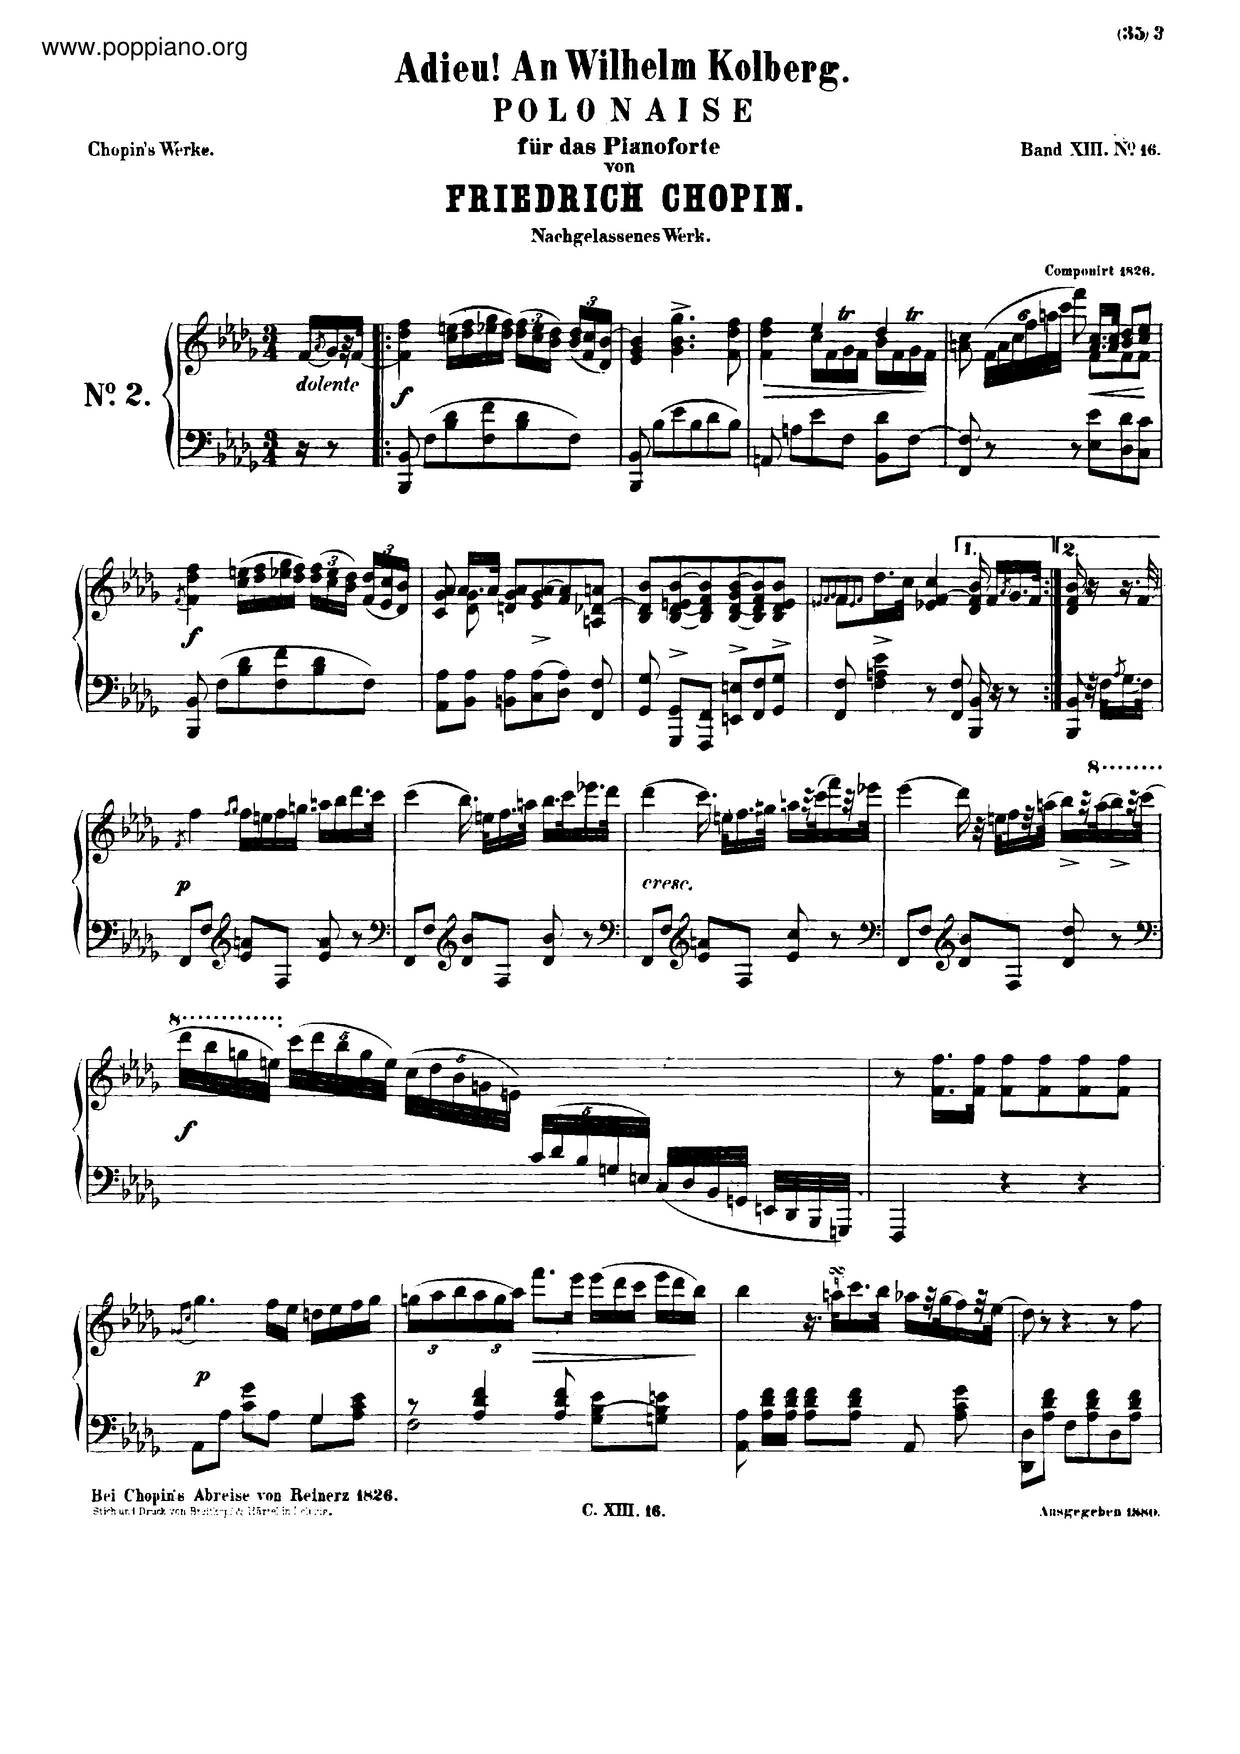 Polonaise In B-Flat Minor, B. 13琴譜